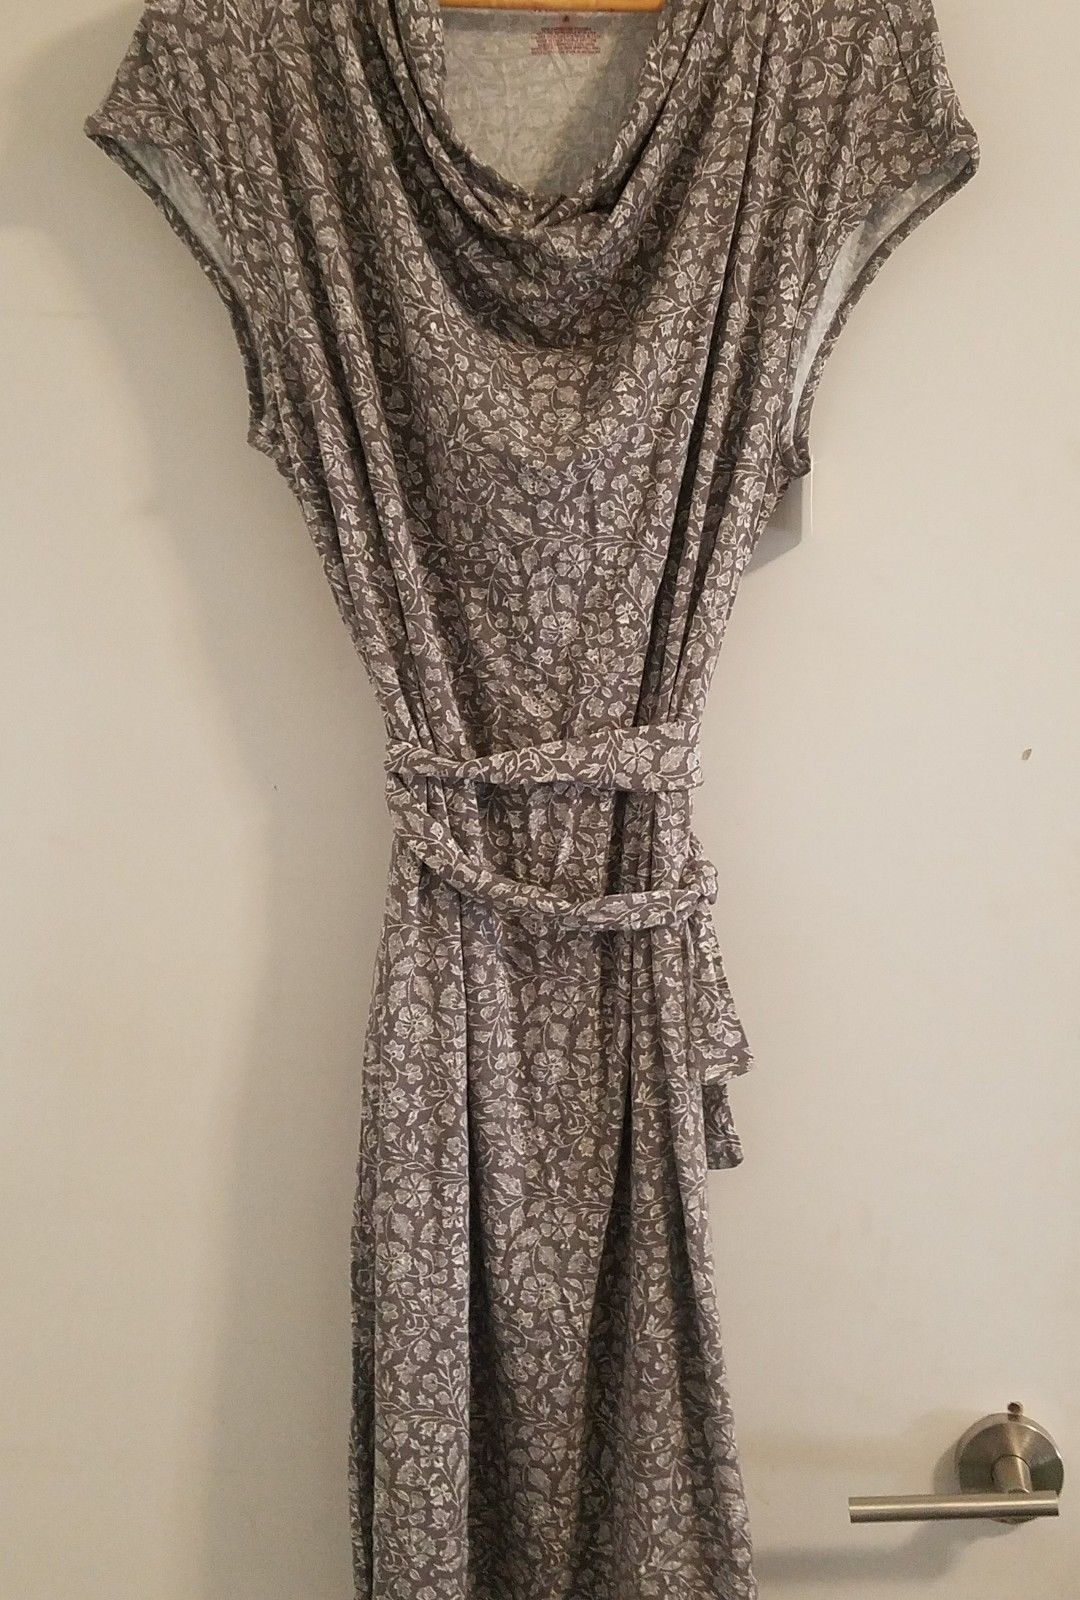 Target Merona Grey Jersey Stretch Knit Belted Dress Size 1-2 - $16.82